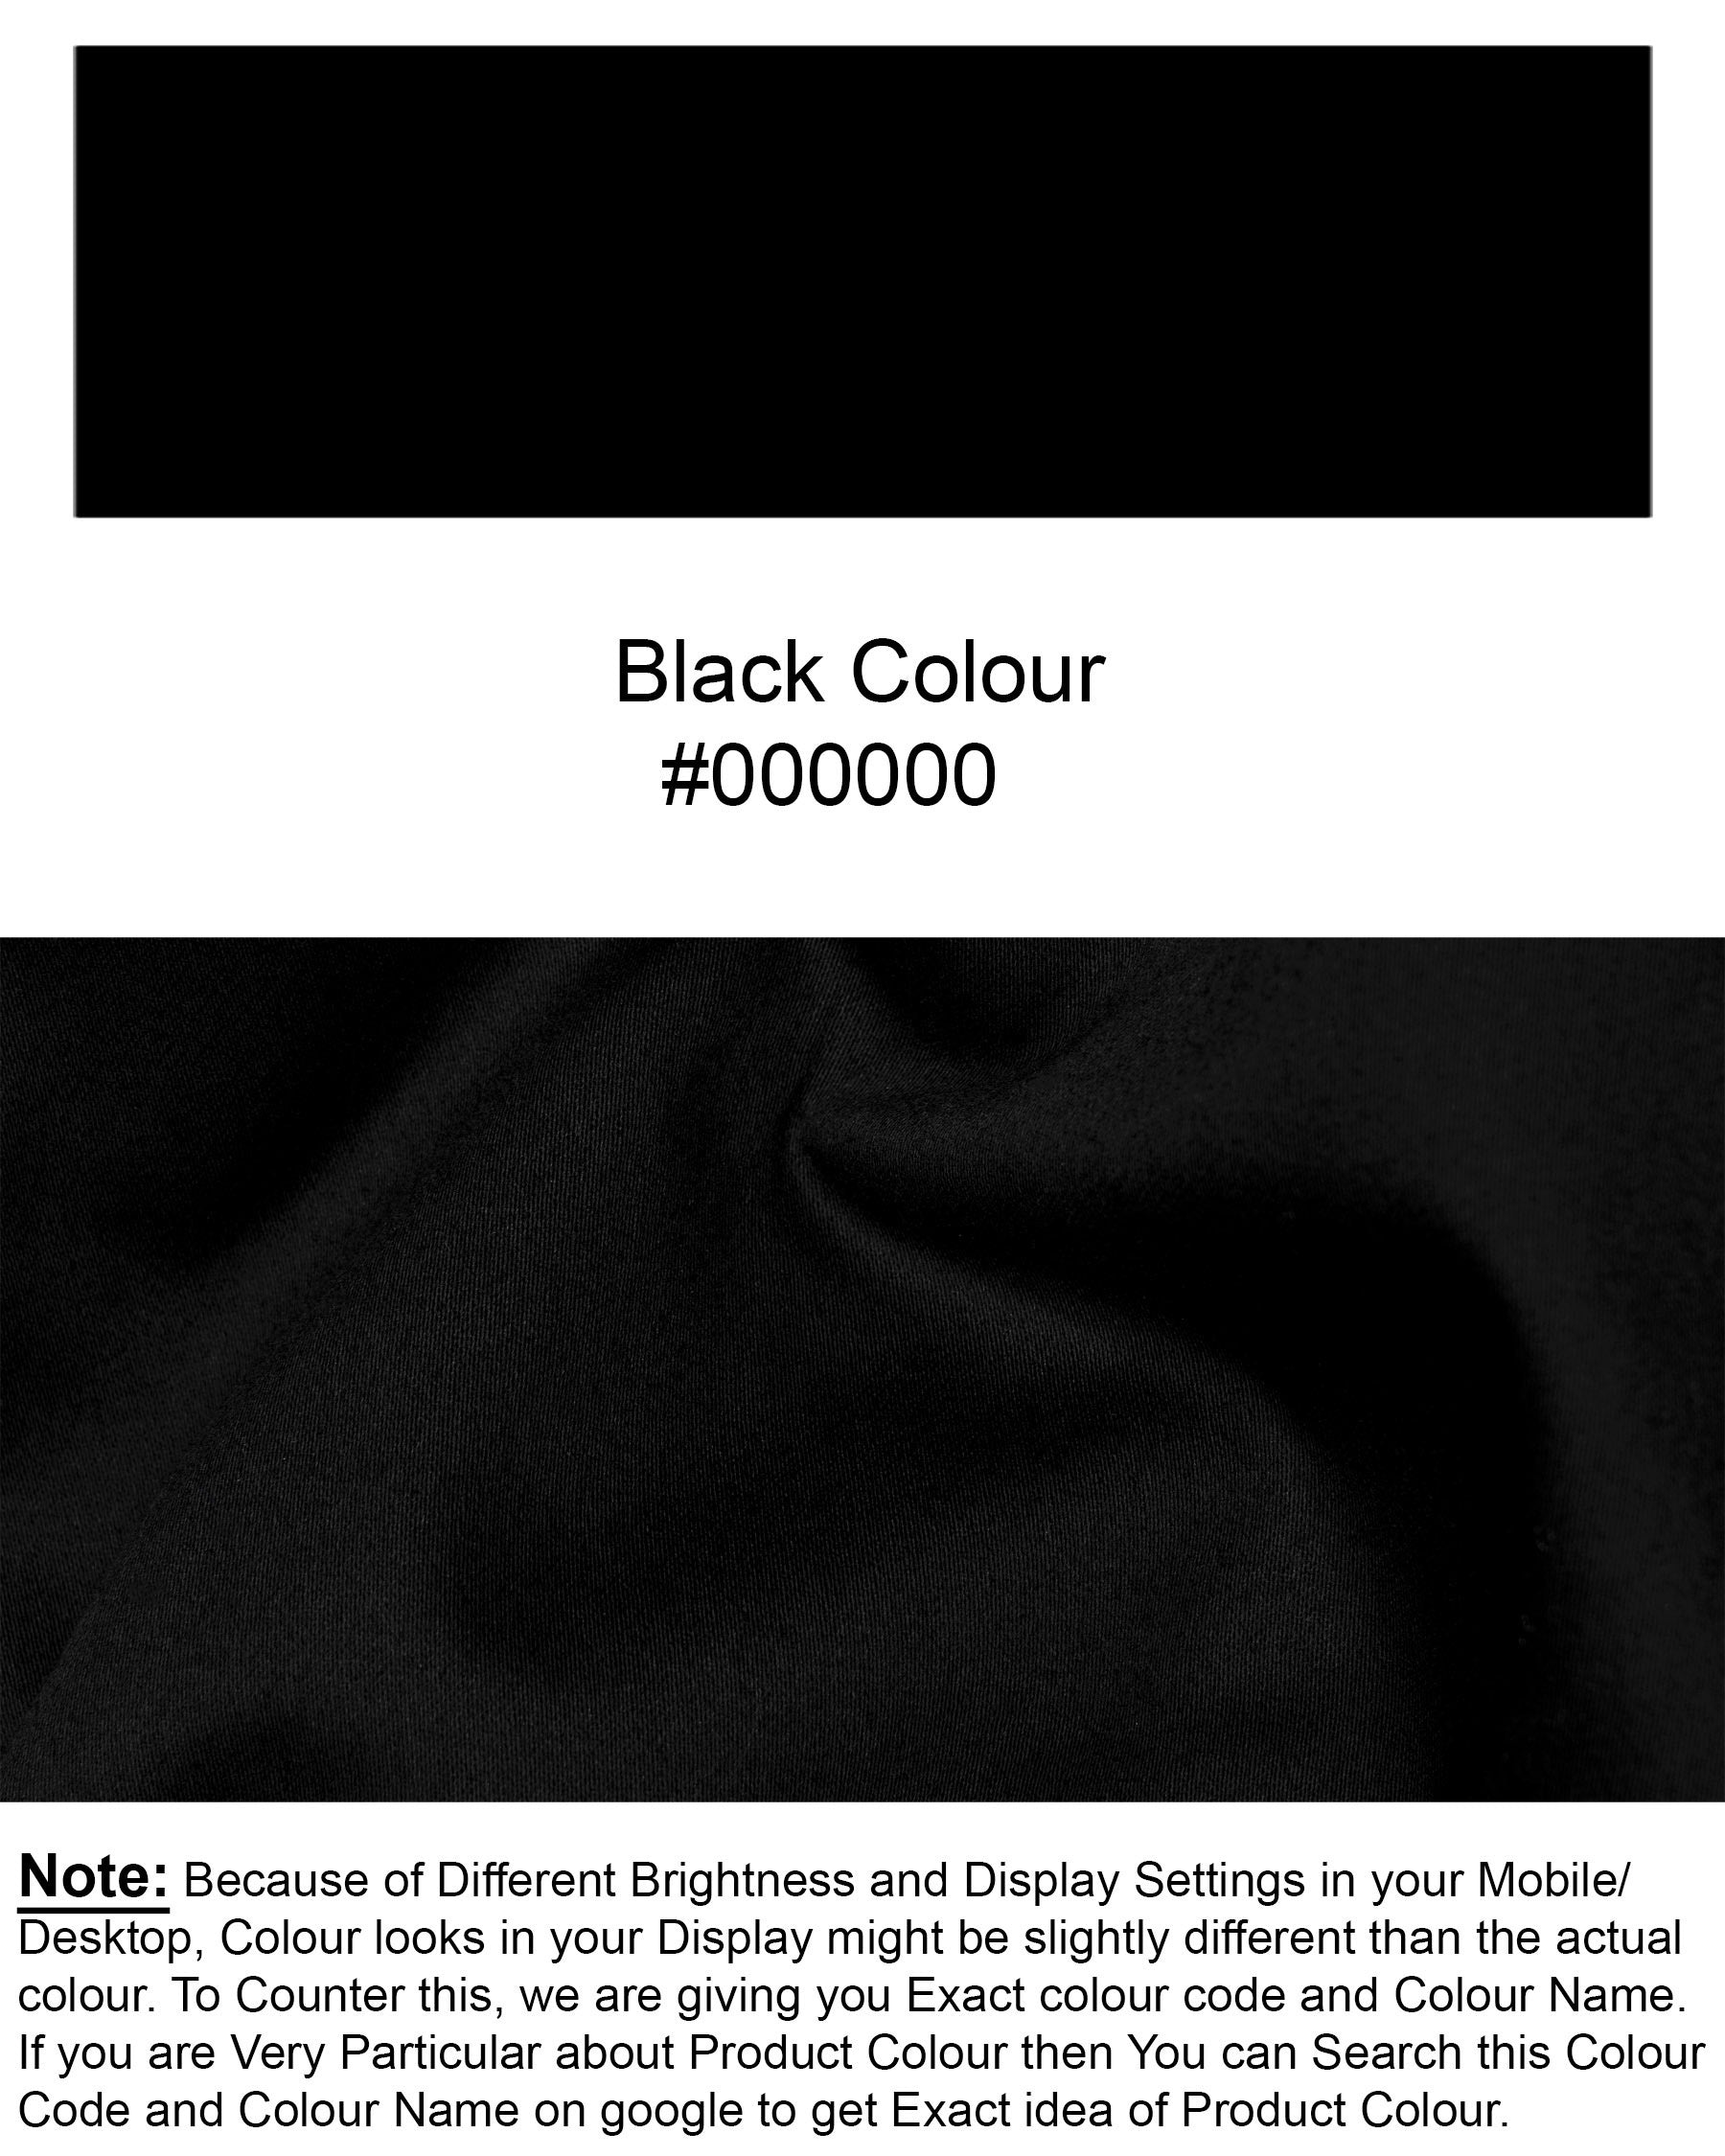 Jade Black With horizontal stitches Bandhgala Designer Blazer BL1812-BG-D168-36,BL1812-BG-D168-38,BL1812-BG-D168-40,BL1812-BG-D1682-42,BL1812-BG-D168-44,BL1812-BG-D168-46,BL1812-BG-D168-48,BL1812-BG-D168-50,BL1812-BG-D168-52,BL1812-BG-D168-54,BL1812-BG-D168-56,BL1812-BG-D168-58,BL1812-BG-D168-60